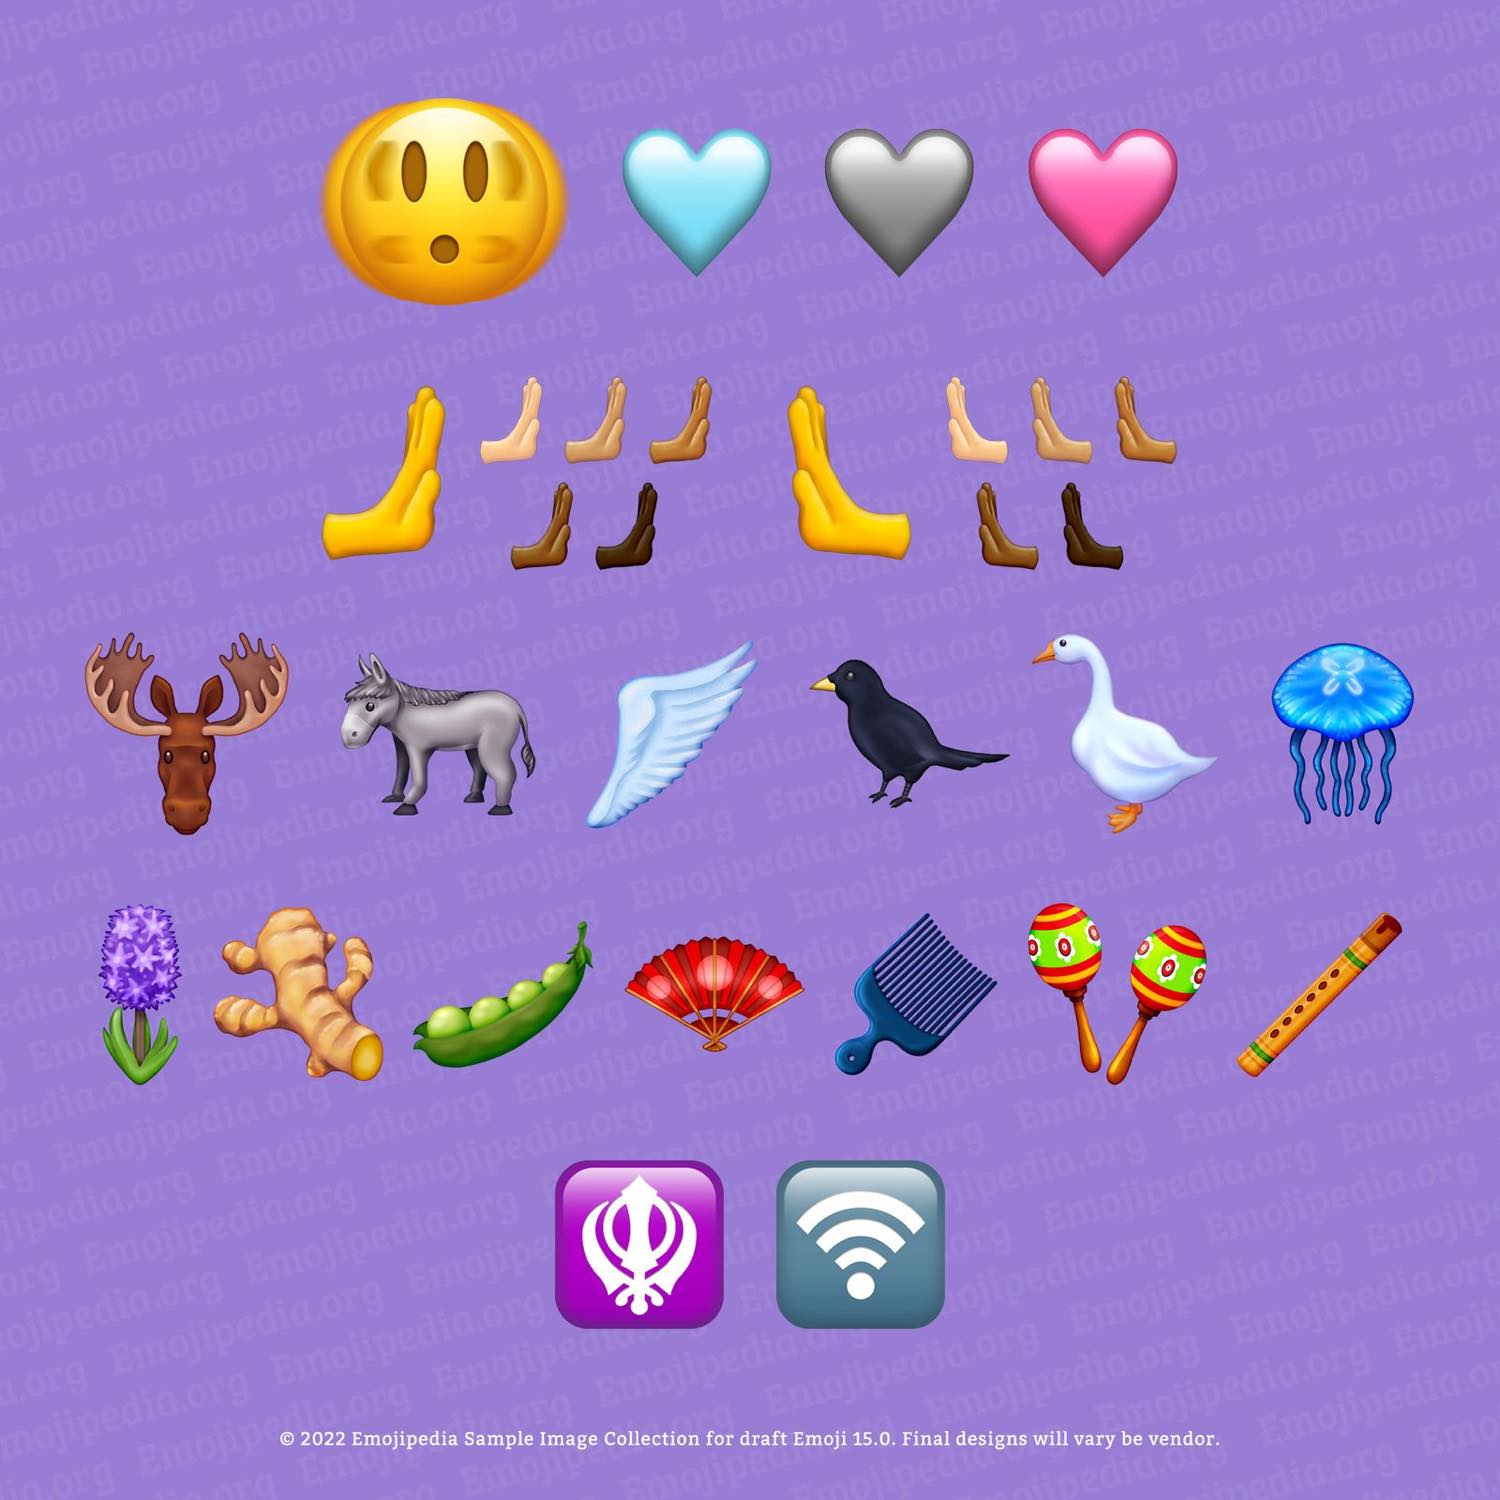 ｢Emoji 15.0｣で追加される予定の新たな絵文字の候補が明らかに − 31種類が追加予定